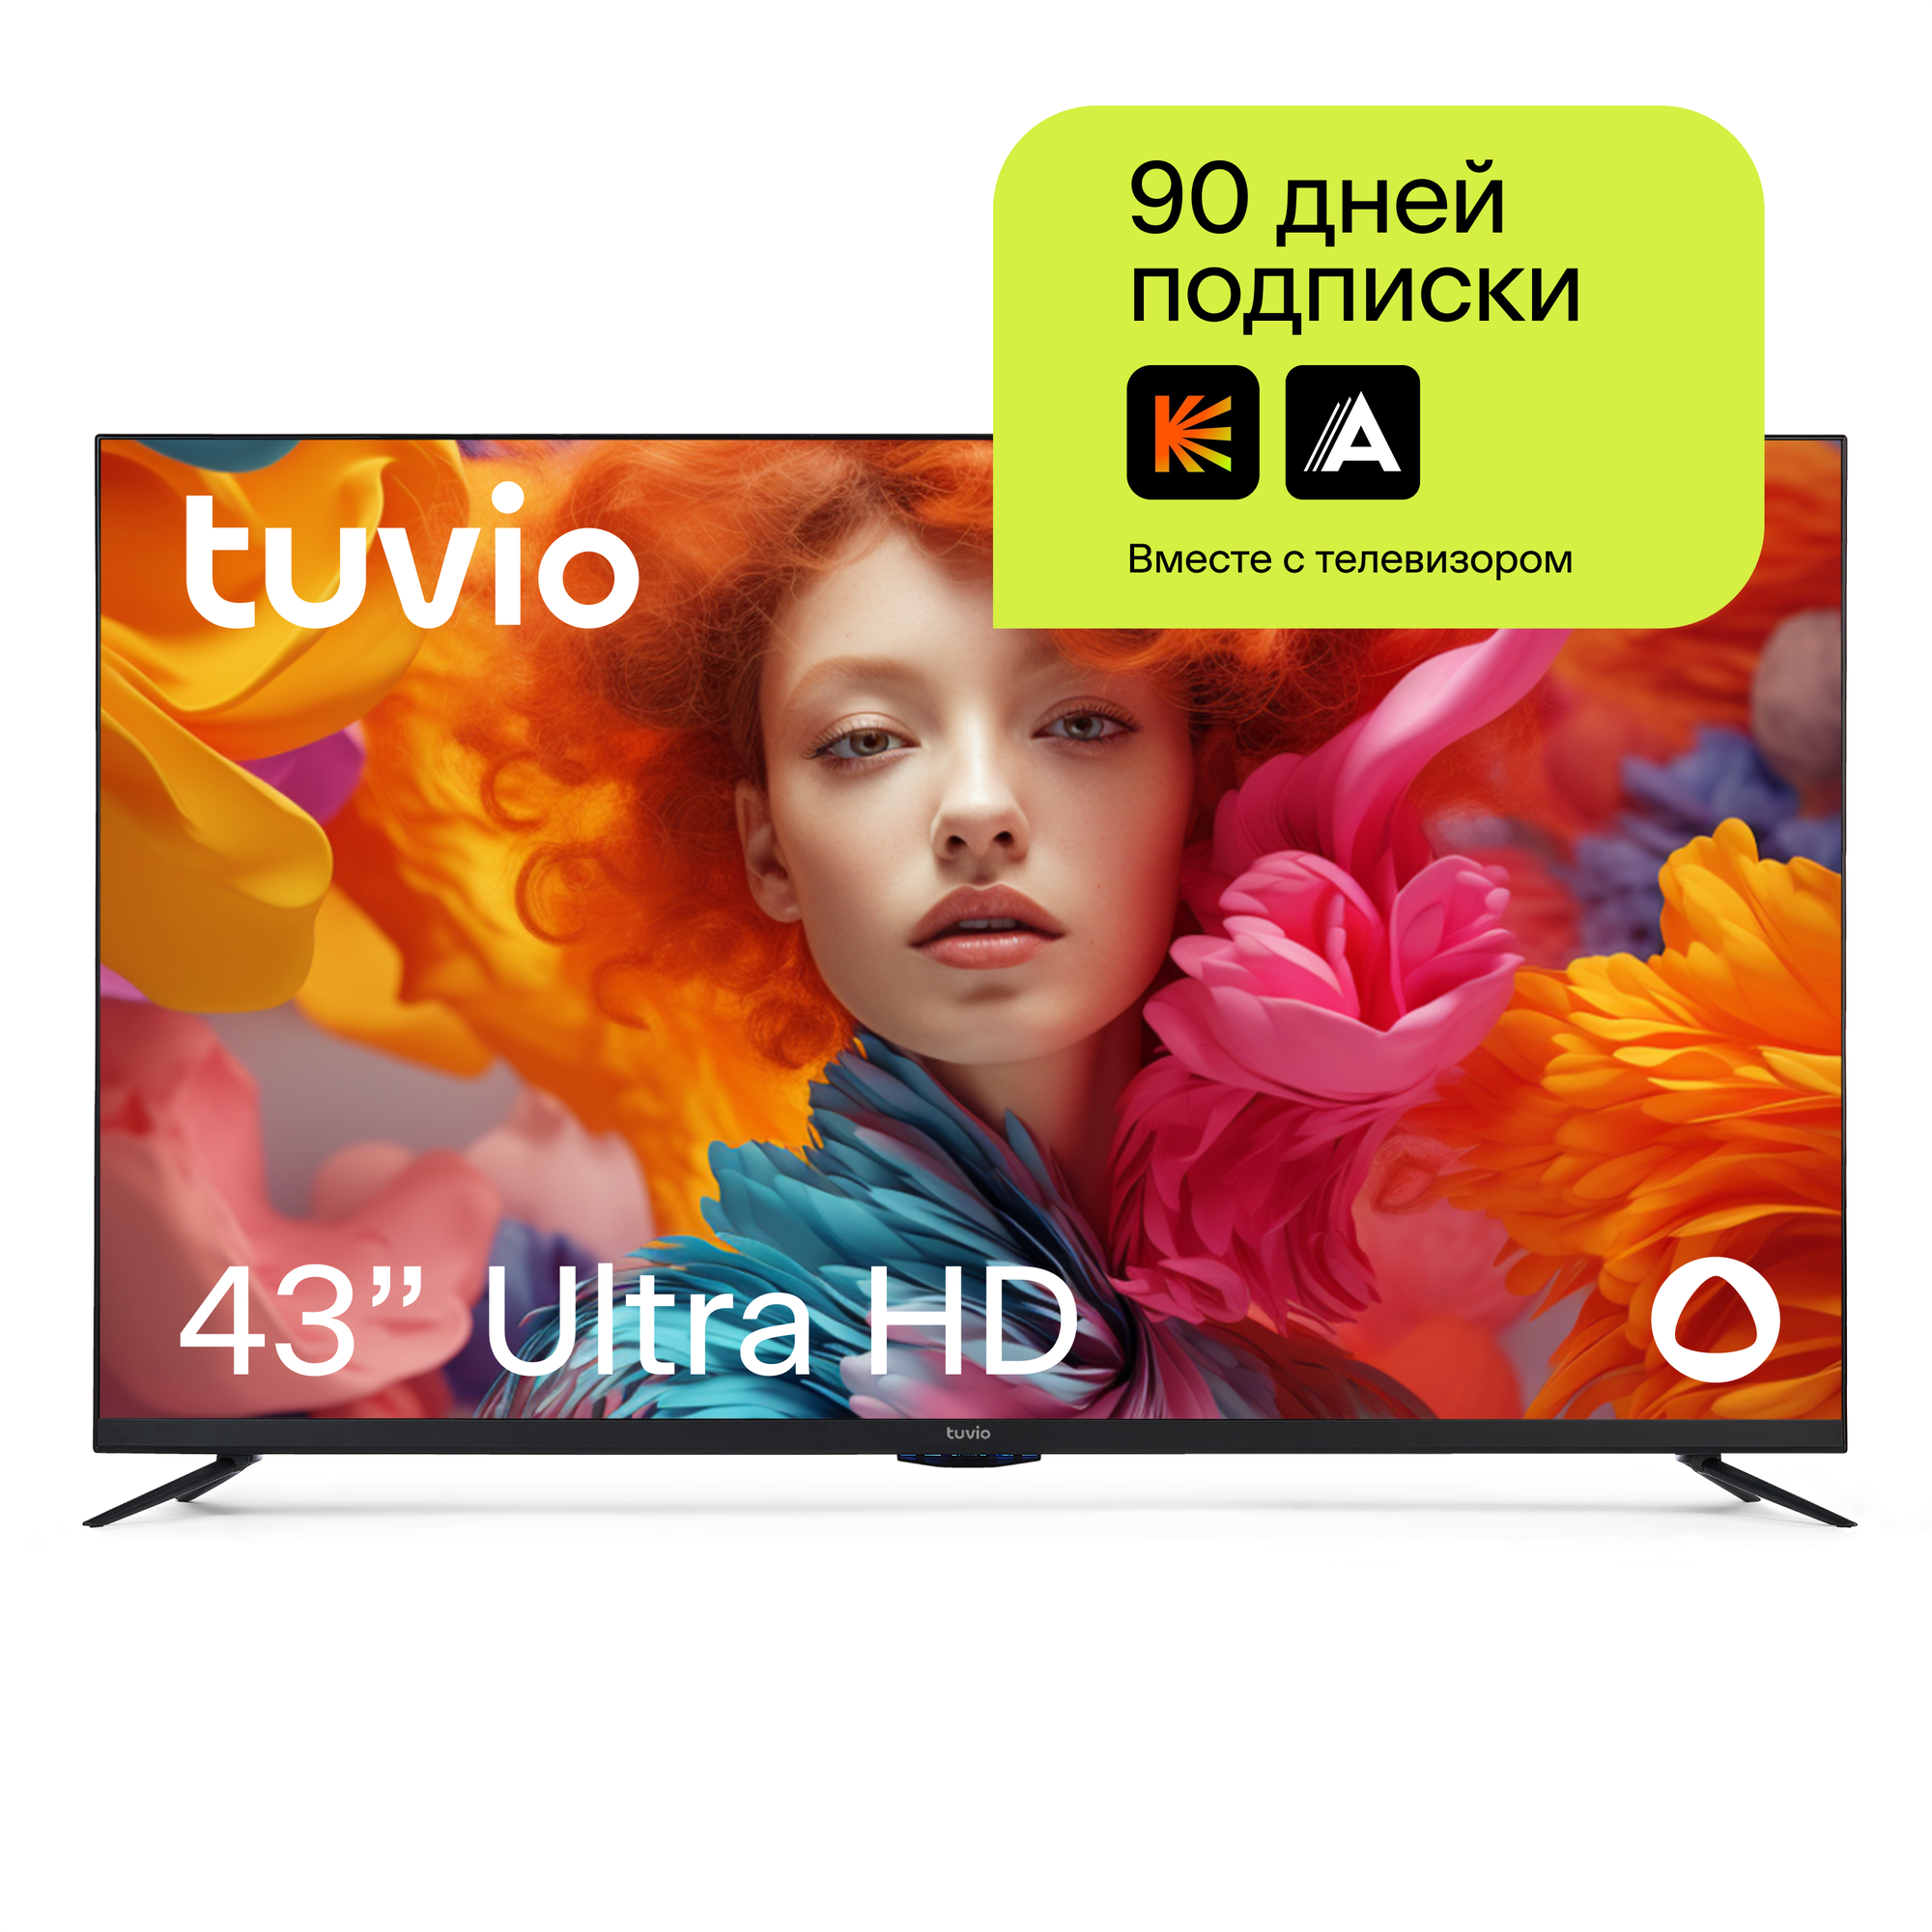 43” Телевизор Tuvio 4К ULTRA HD DLED на платформе YaOS черный